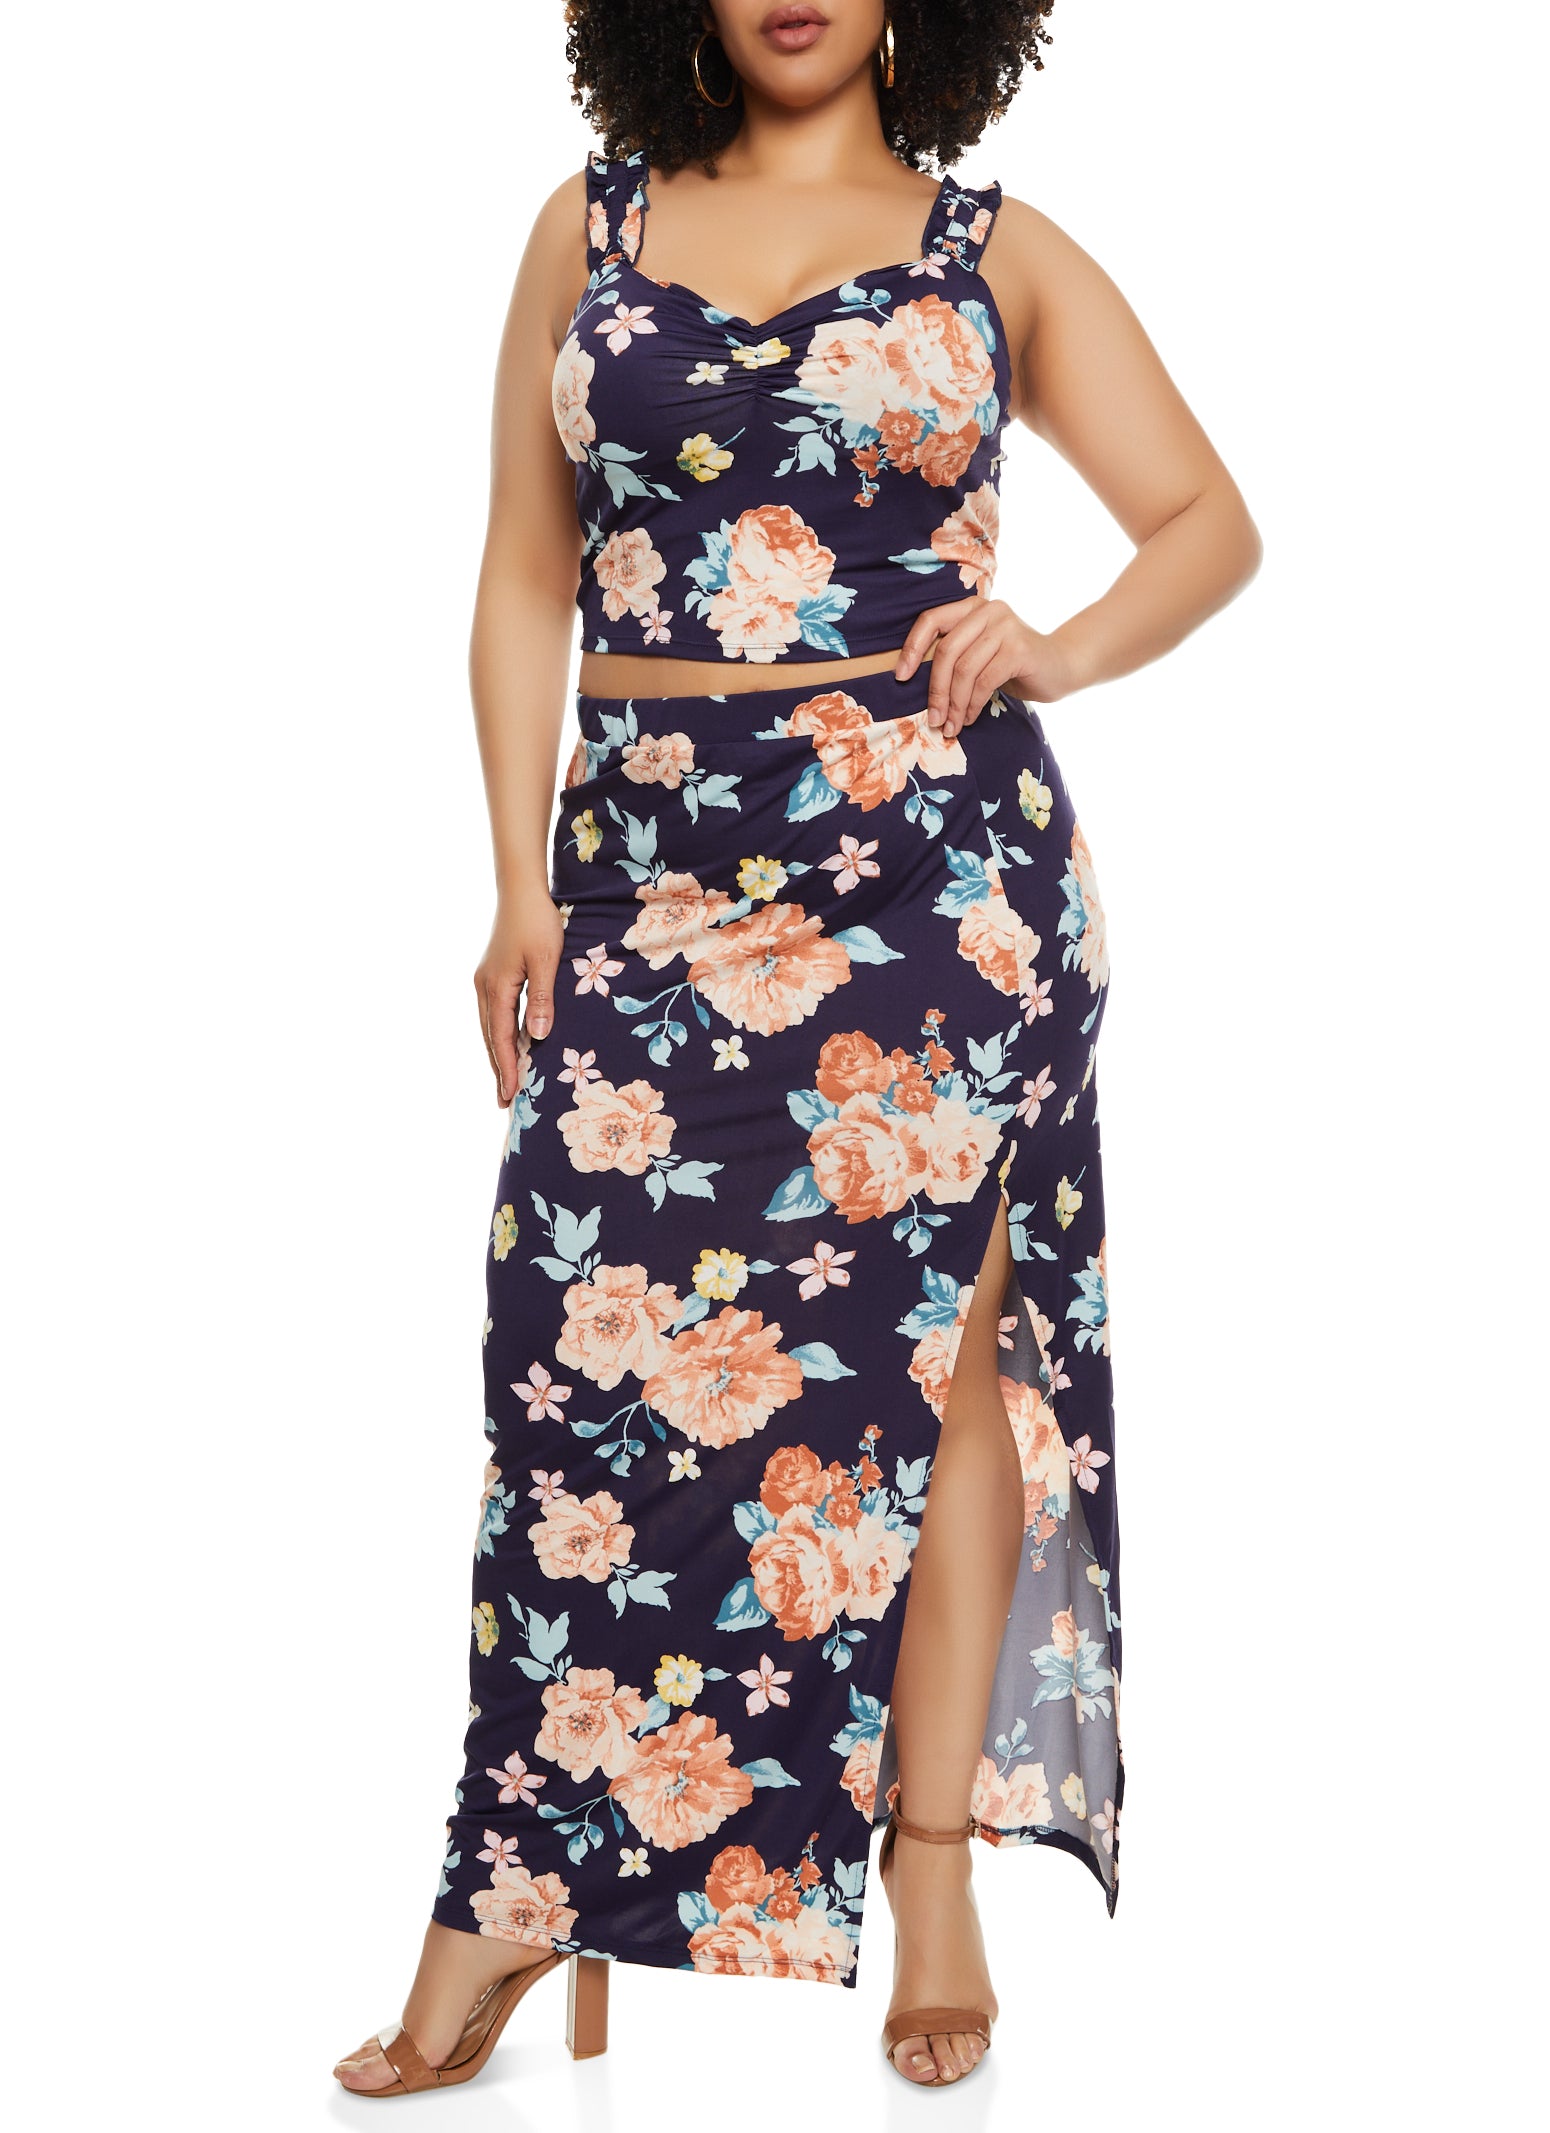 Womens Plus Size Haute Monde Floral Print Crop Top and Side Slit Maxi Skirt, Blue, Size 2X